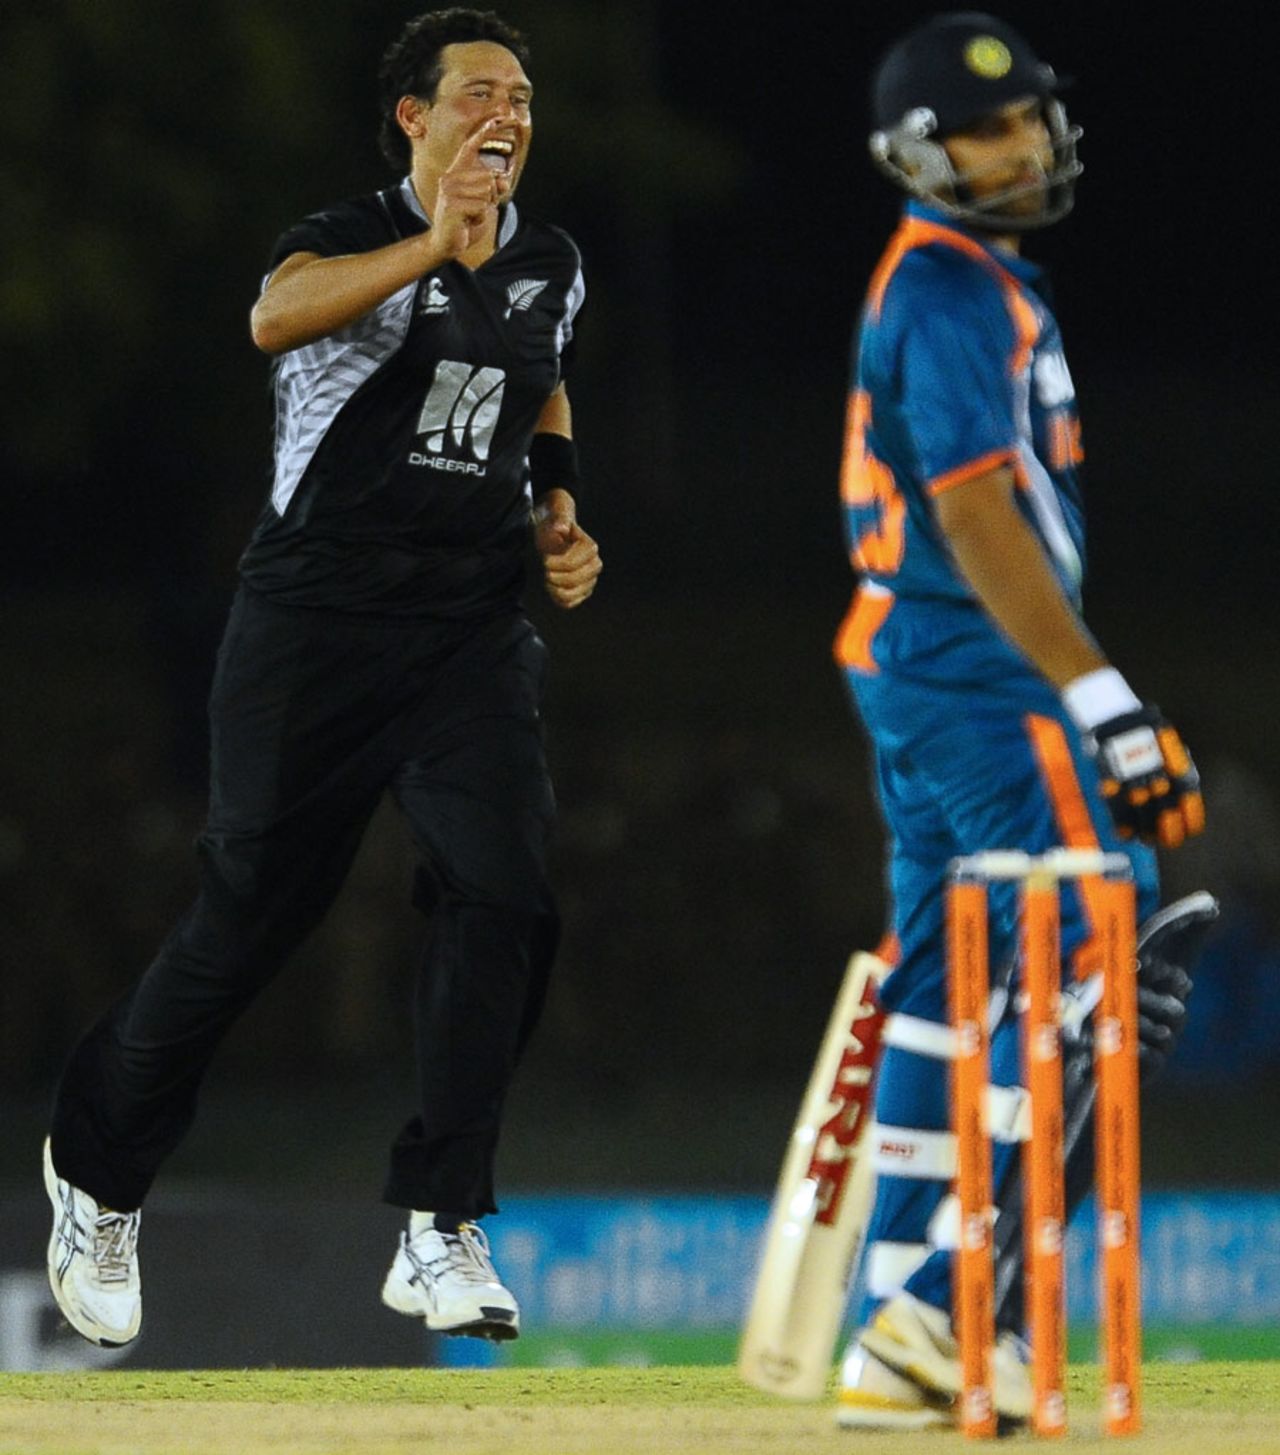 Daryl Tuffey had Rohit Sharma caught at first slip, India v New Zealand, tri-series, 1st ODI, August 10, 2010